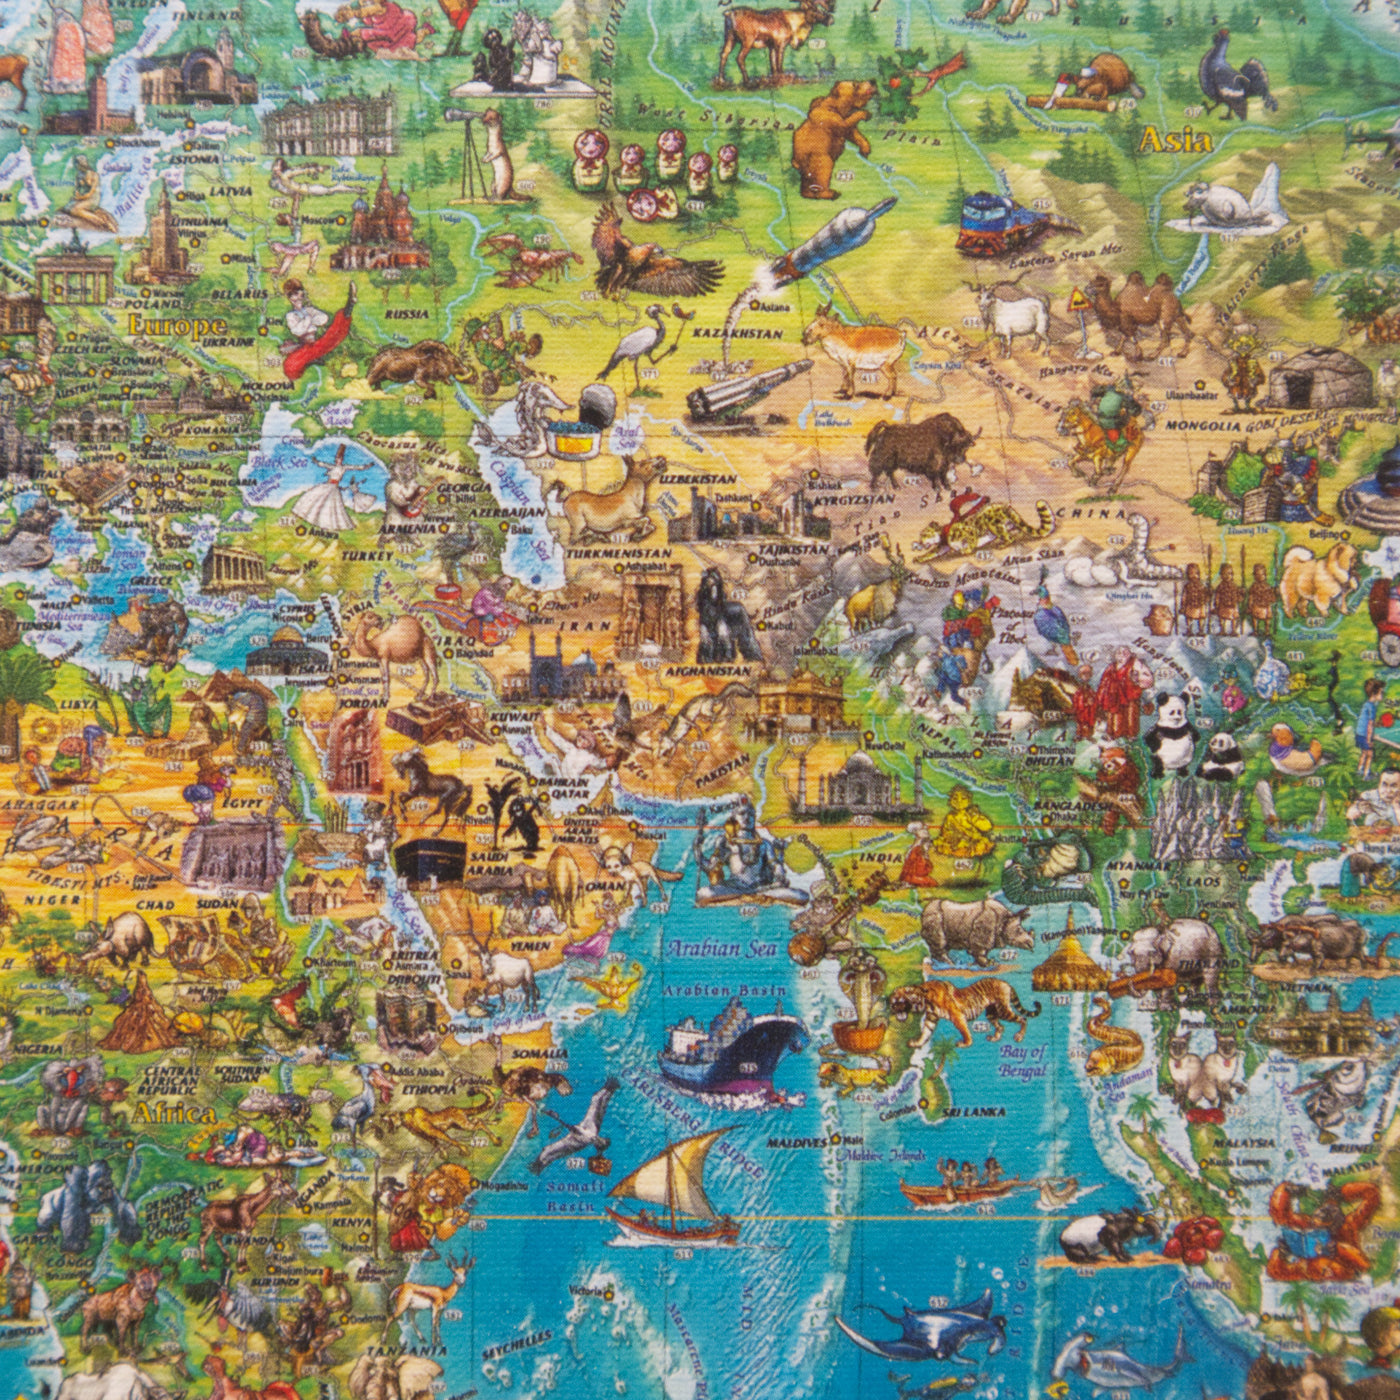 Puzzle Heye 2000-Piece Amazing World Map 